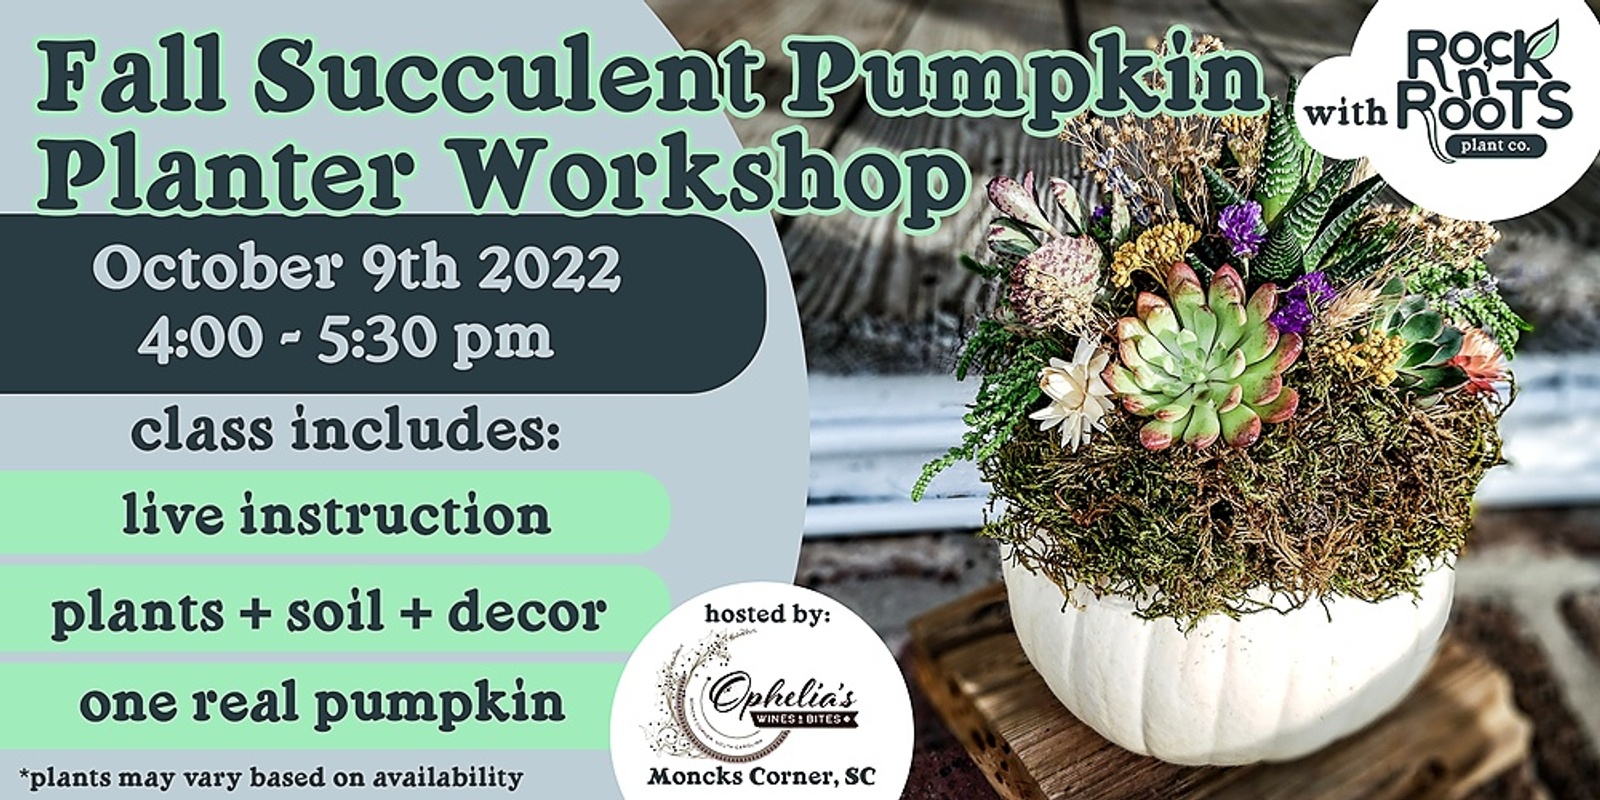 Banner image for Fall Succulent Pumpkin Planter Workshop at Ophelia's Wines & Bites (Moncks Corner, SC)